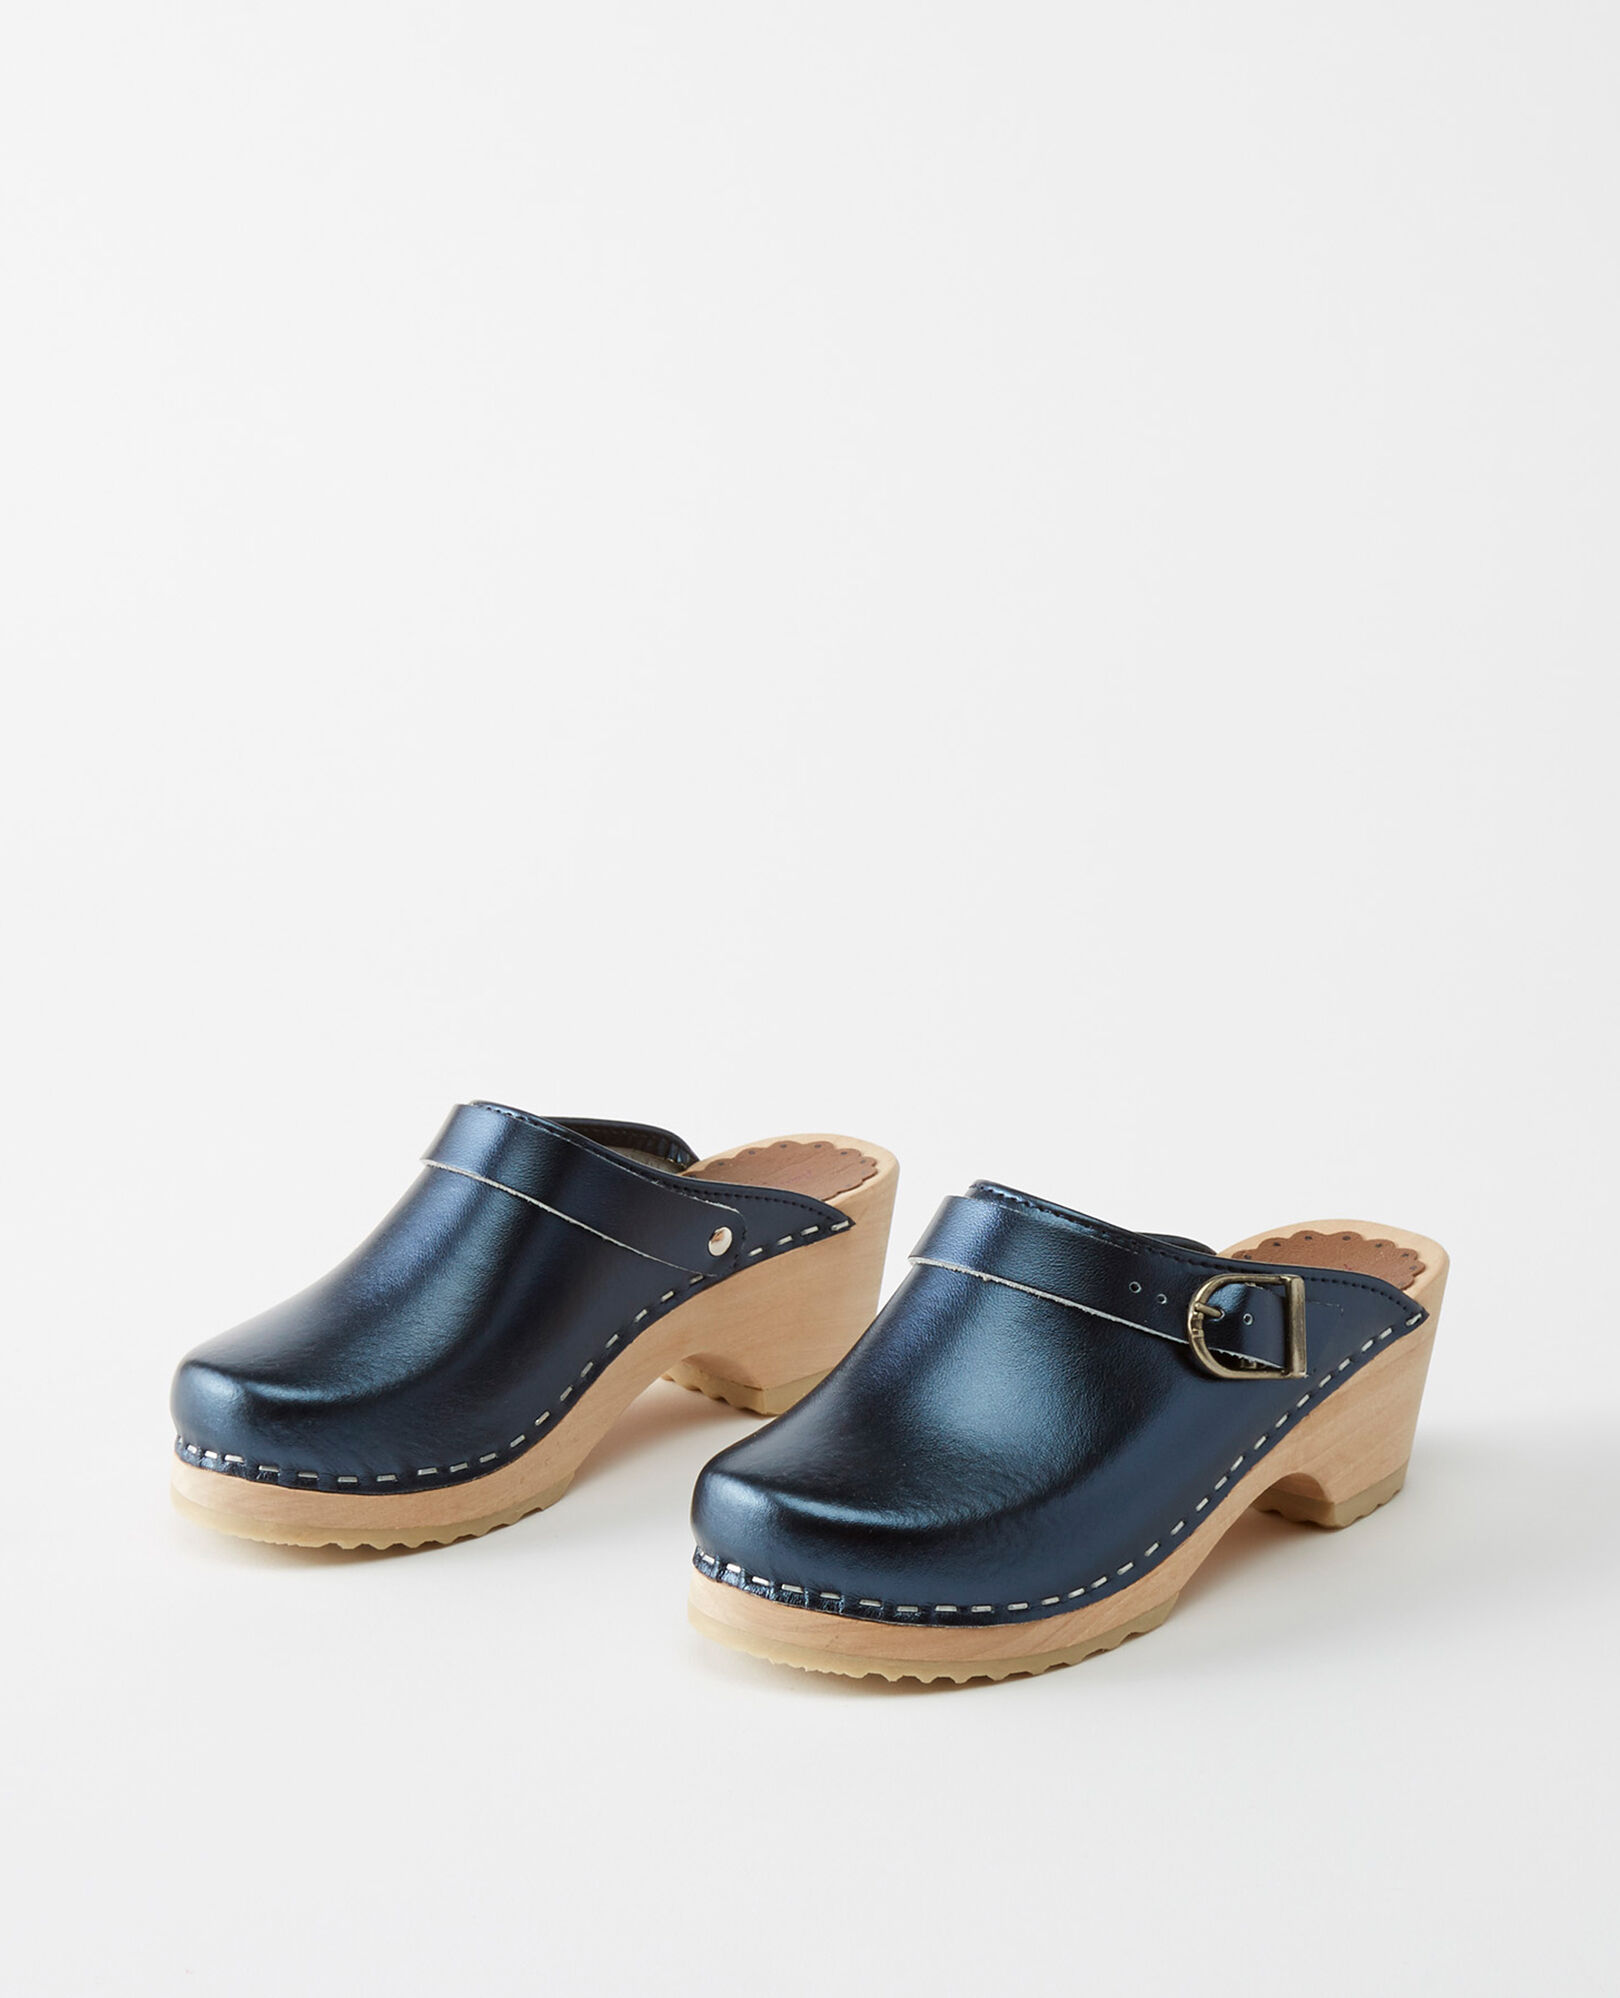 dansko season sandals